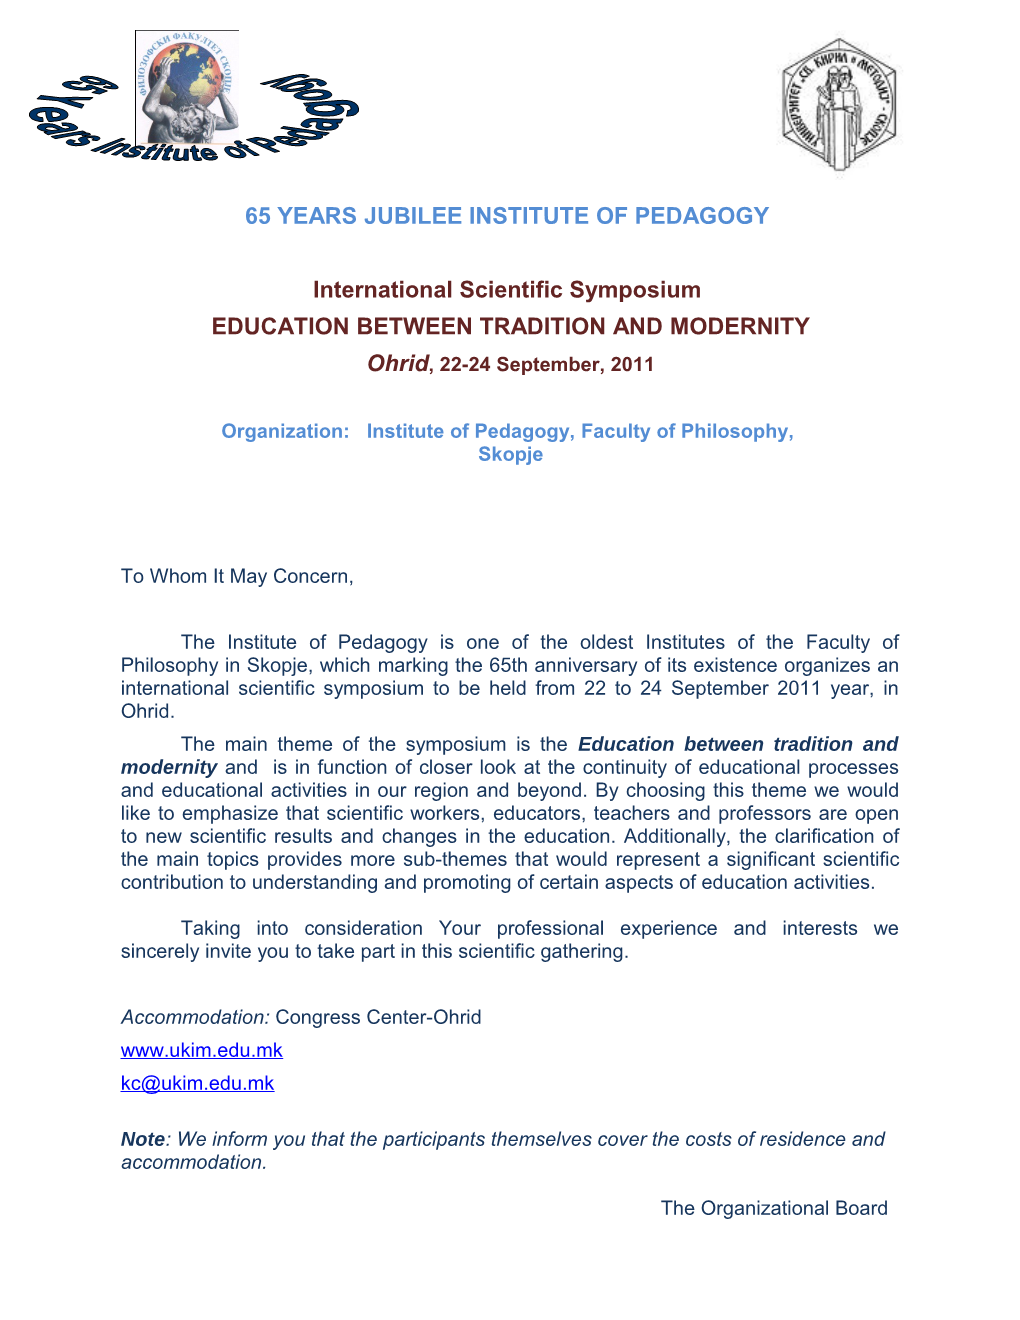 65 Years Jubilee Instituteof Pedagogy